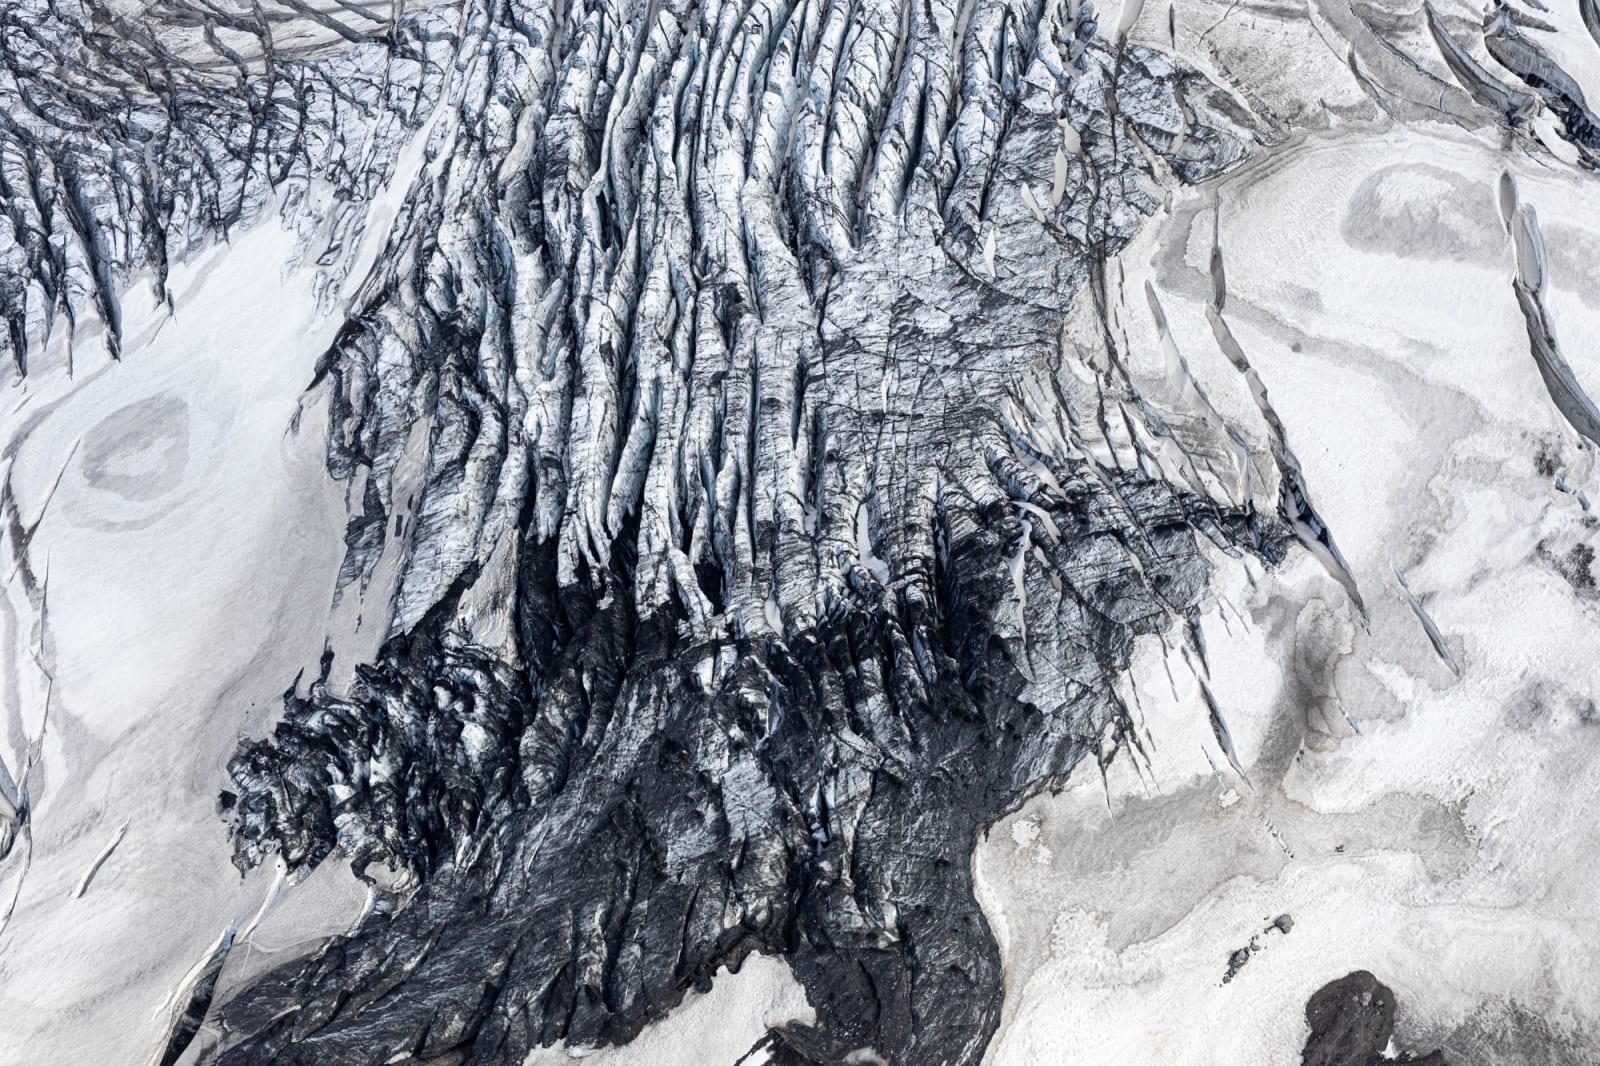 Matjaž Krivic, Iceland Glacier 09, 2019